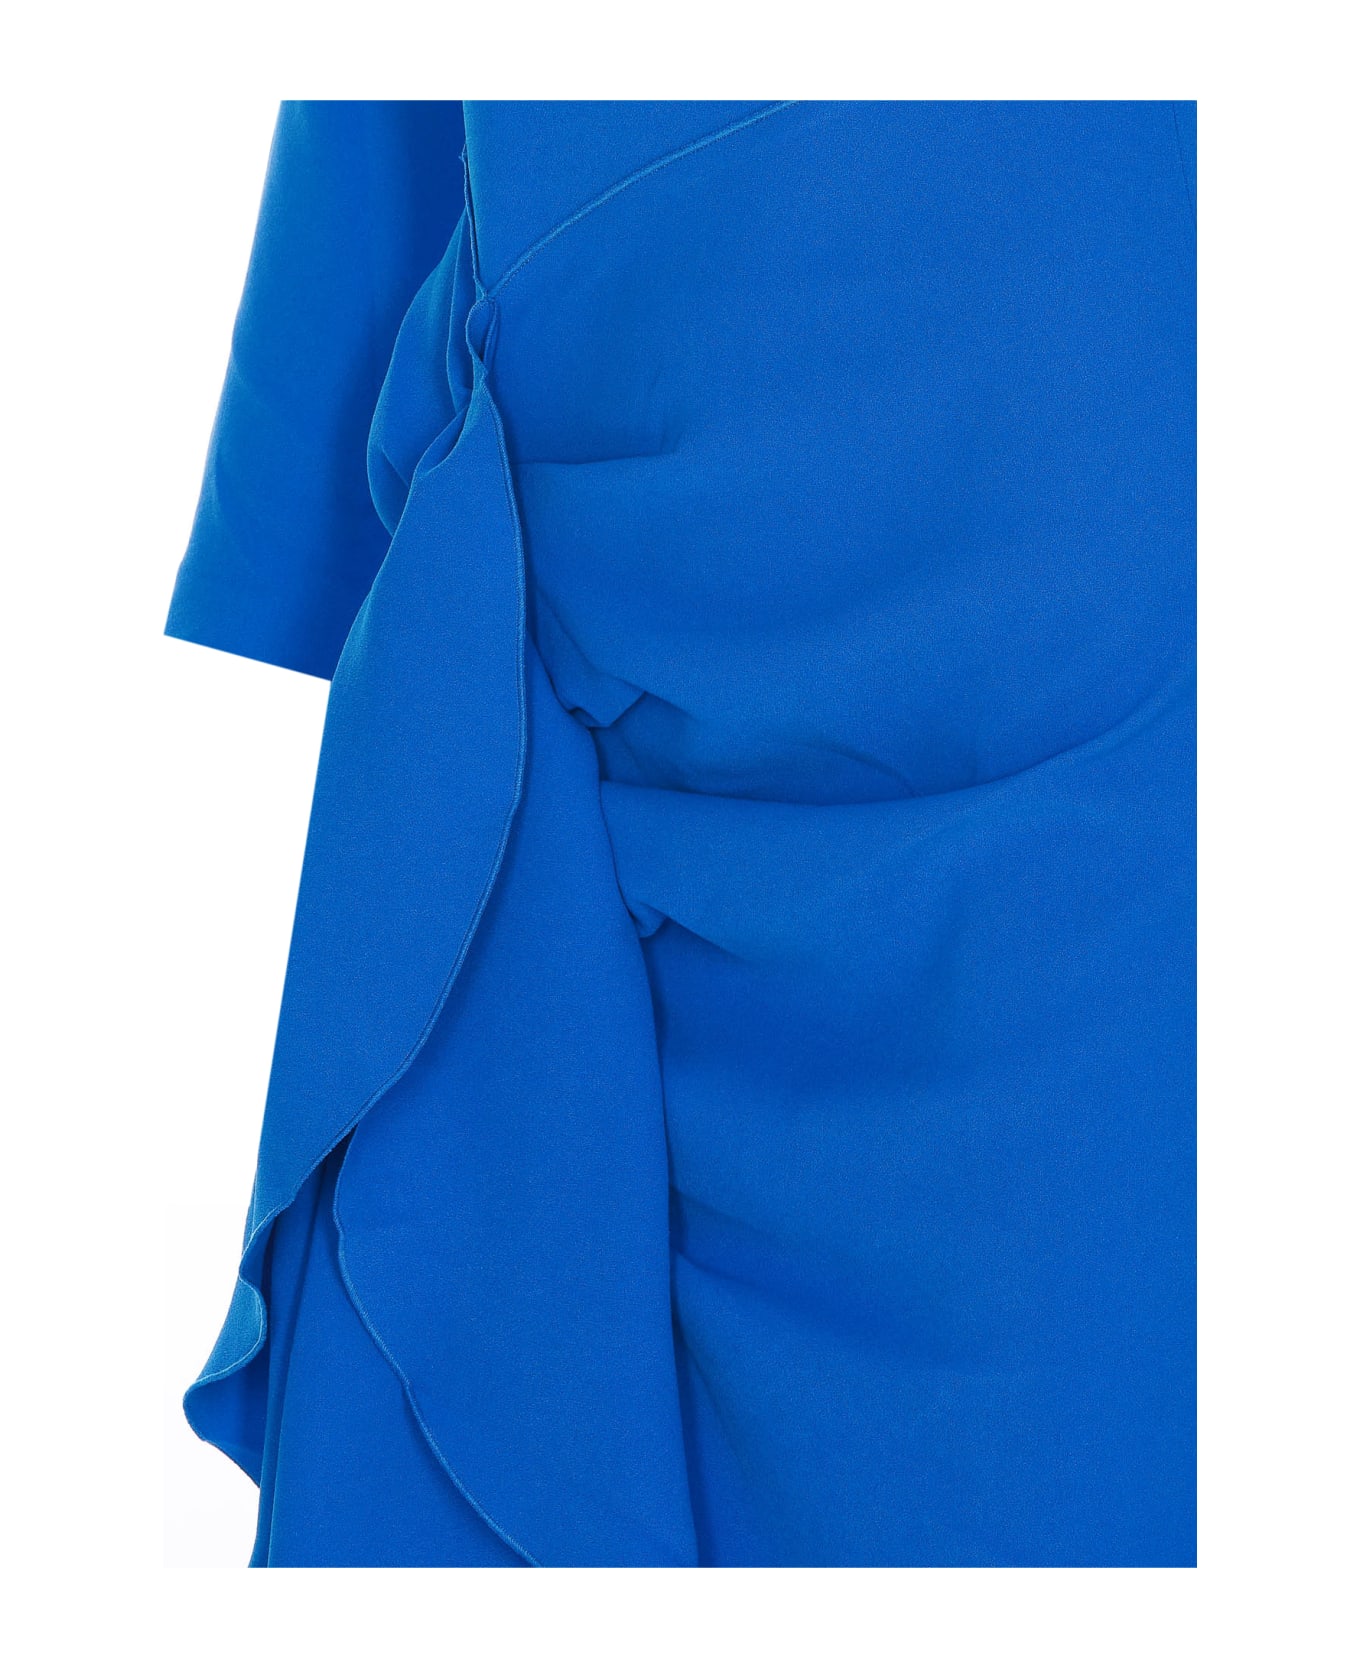 Solace London Nia Maxi Dress - Blue